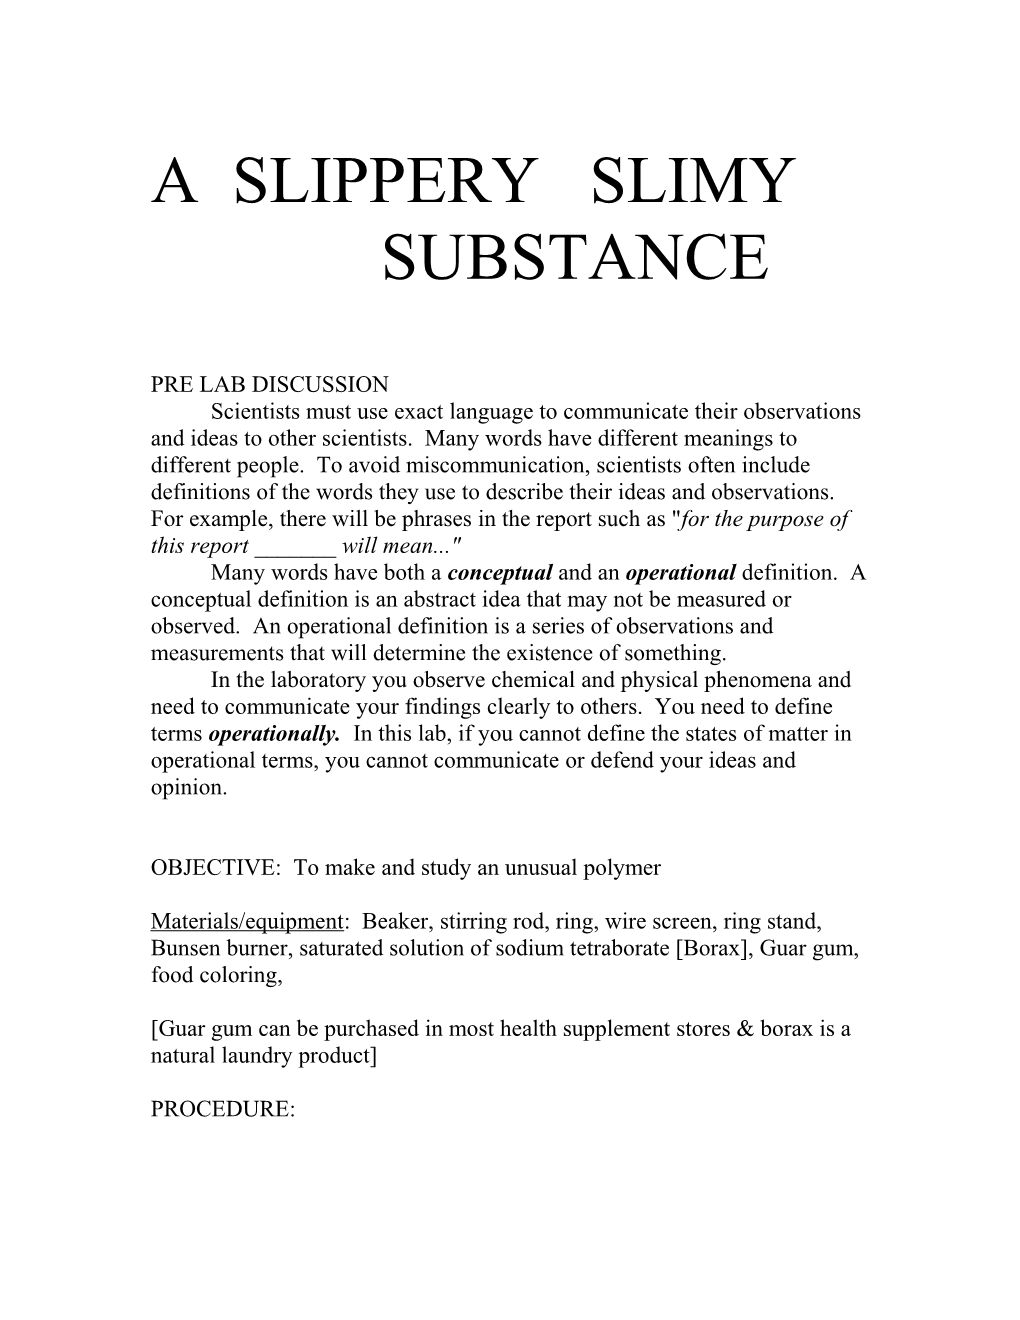 A Slippery Slimy Substance